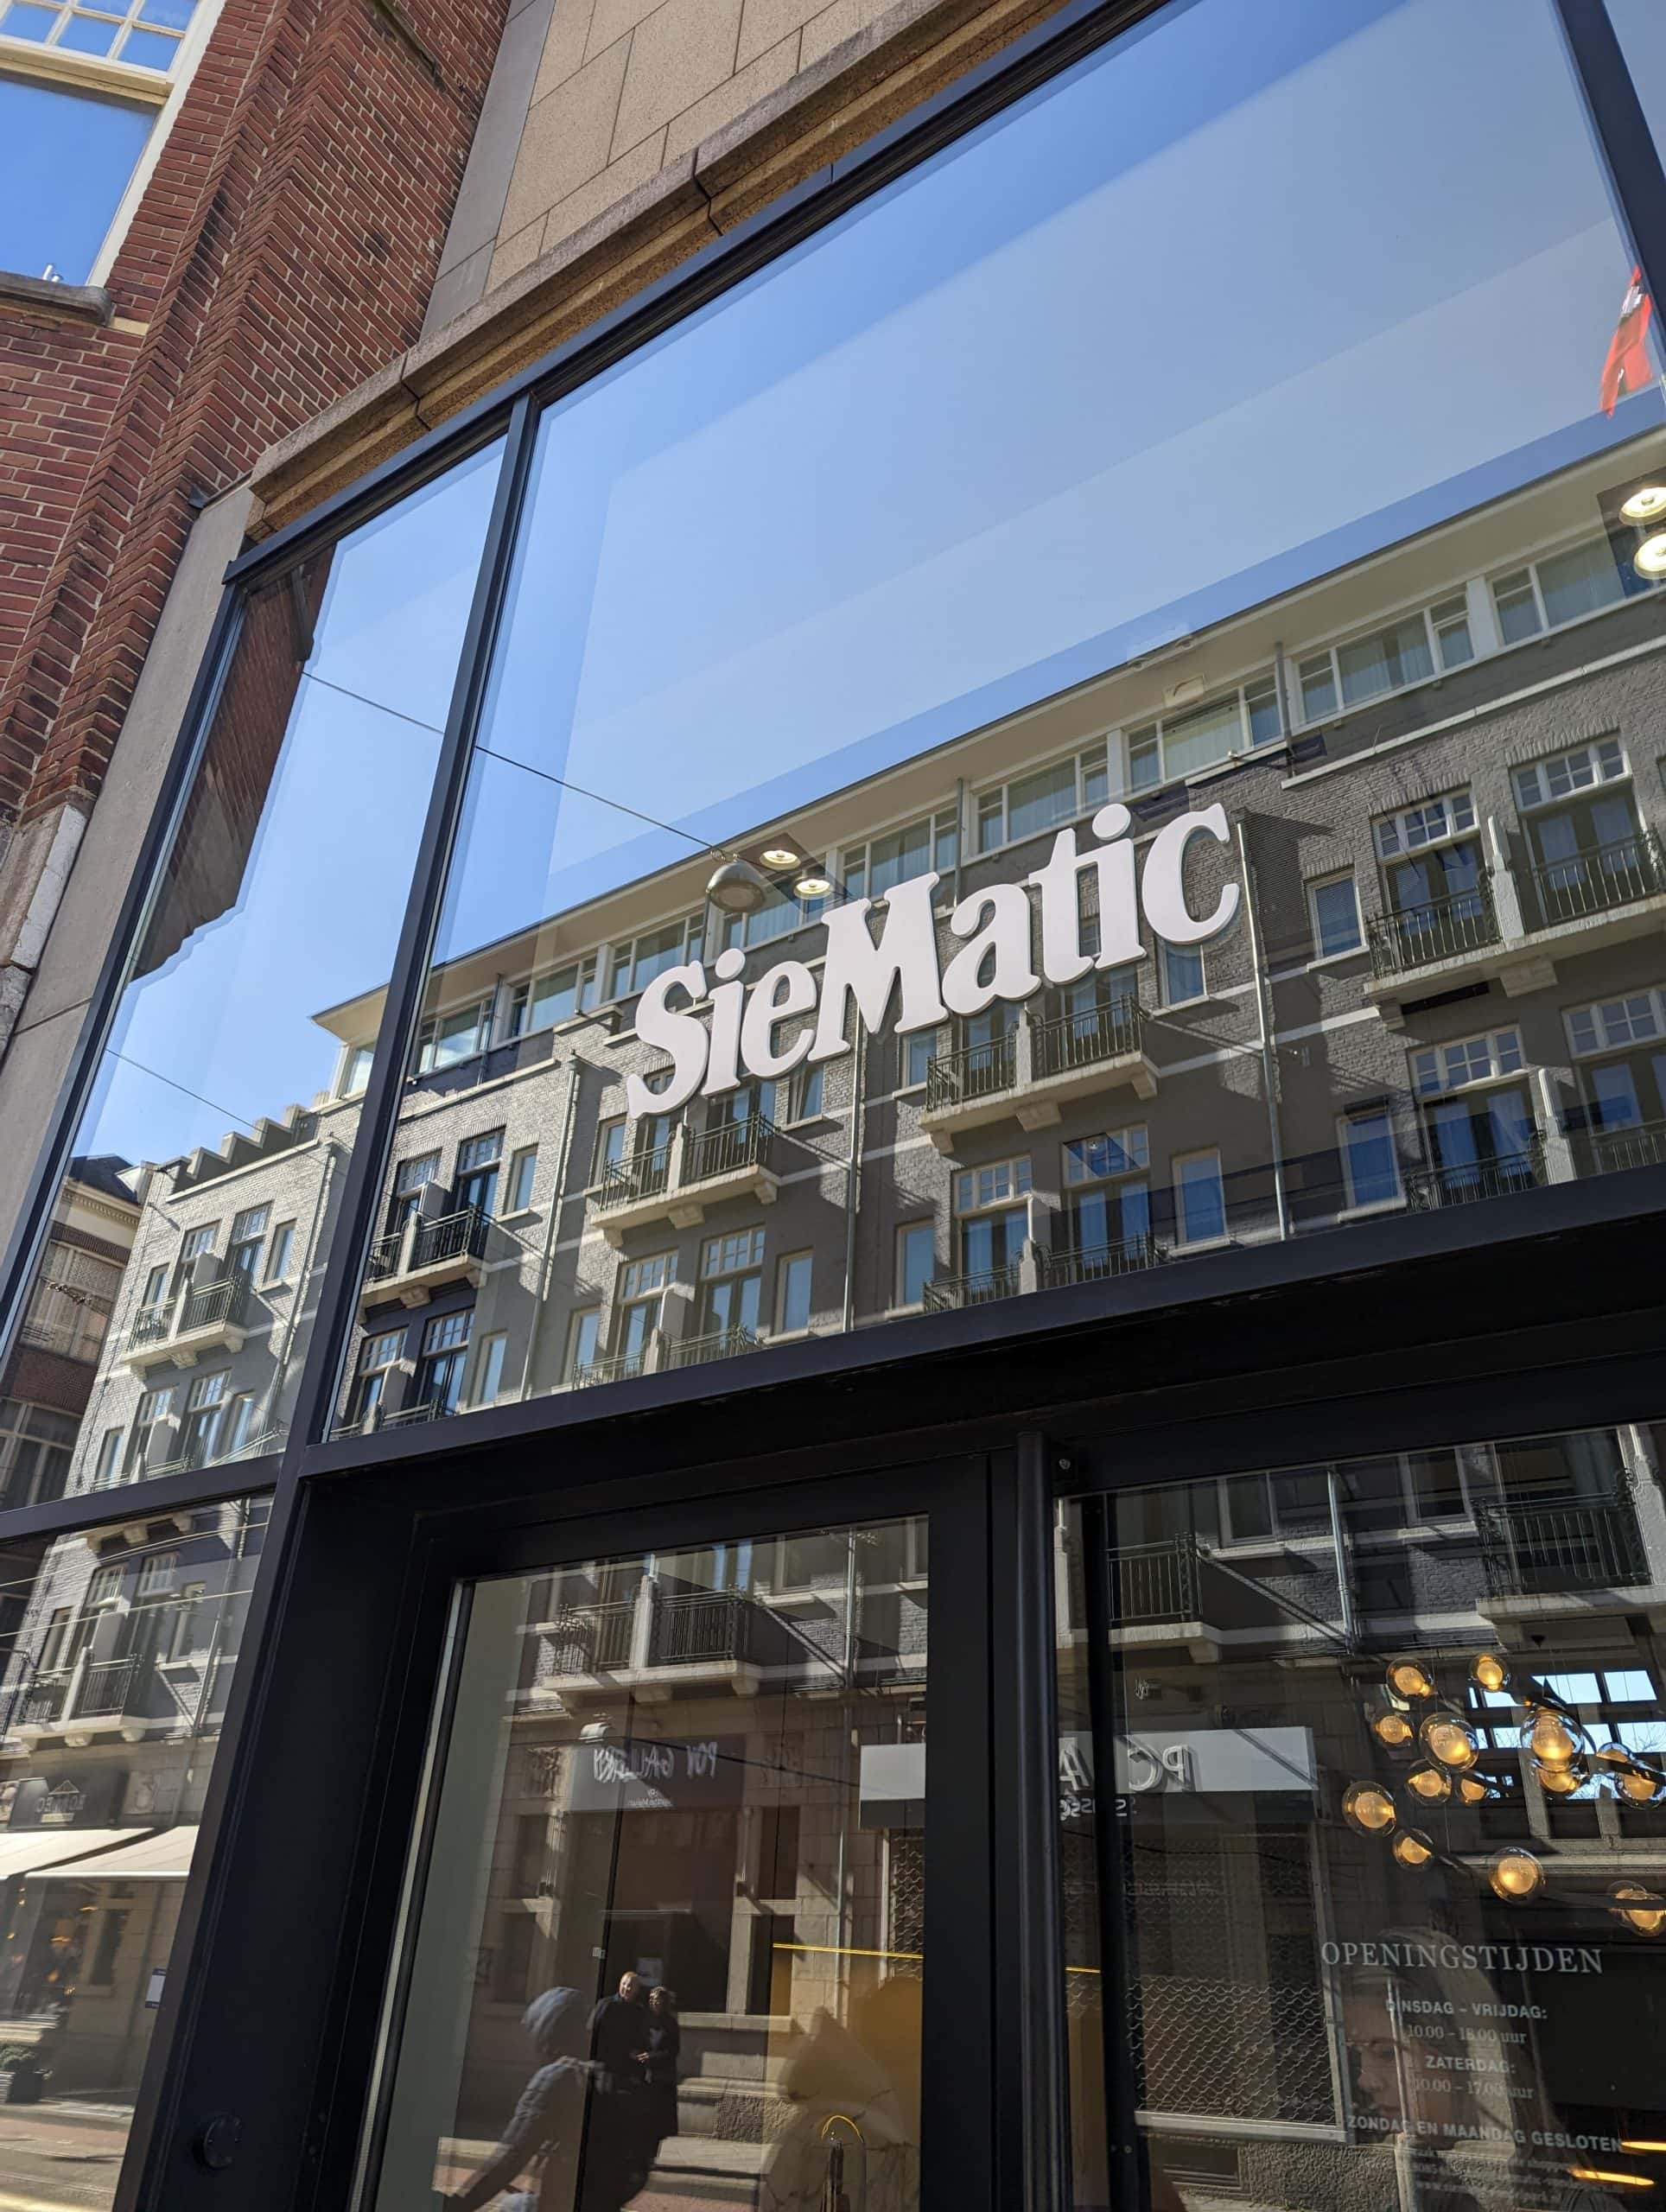 siematic kitchens amsterdam visit 2